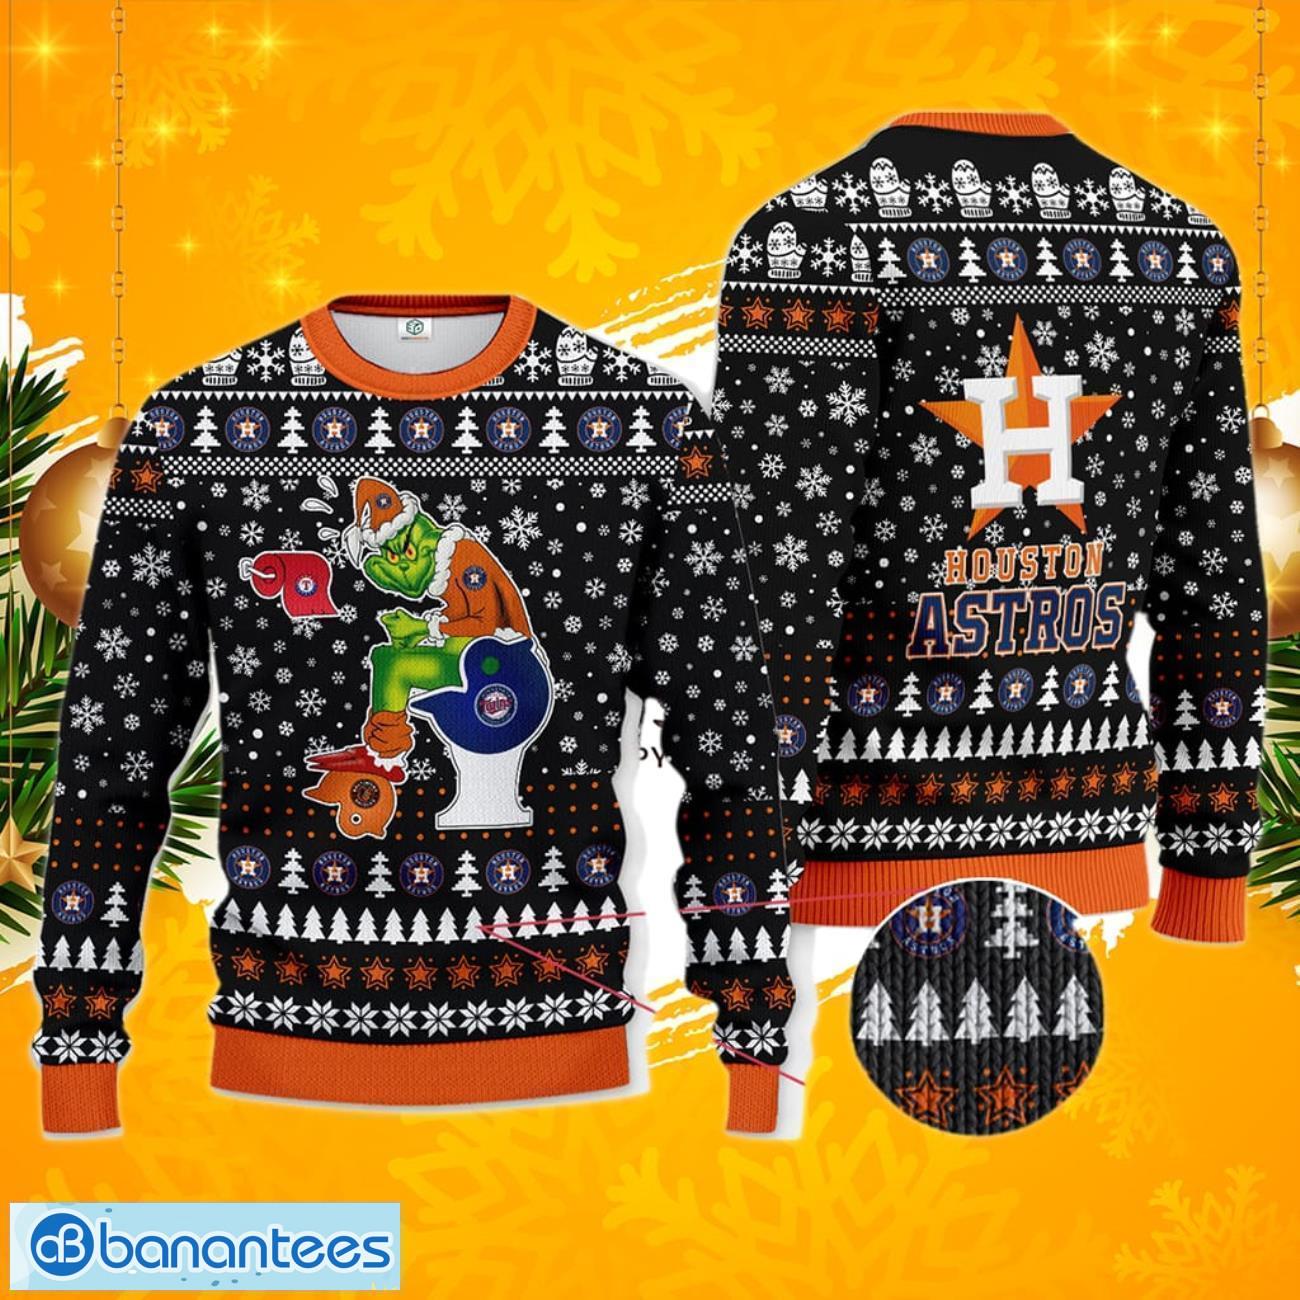 Mlb Houston Astros Ugly Christmas Sweater - Shibtee Clothing